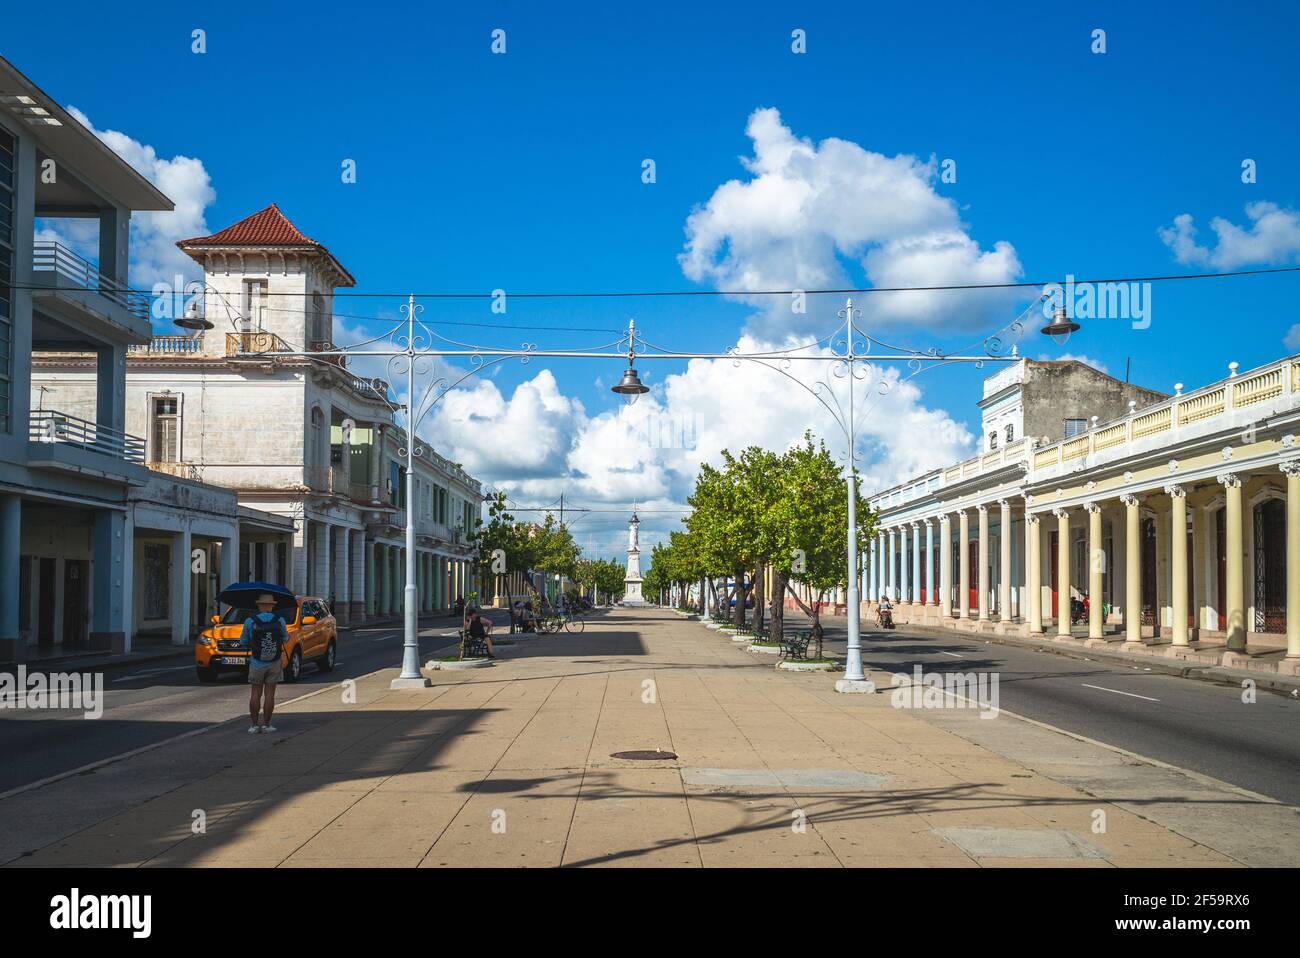 30 octobre 2019 : scène de rue de Paseo del Prado, la rue principale de Cienfuegos et la plus longue rue de Cuba avec environ 2 kilomètres de longueur. Il Banque D'Images